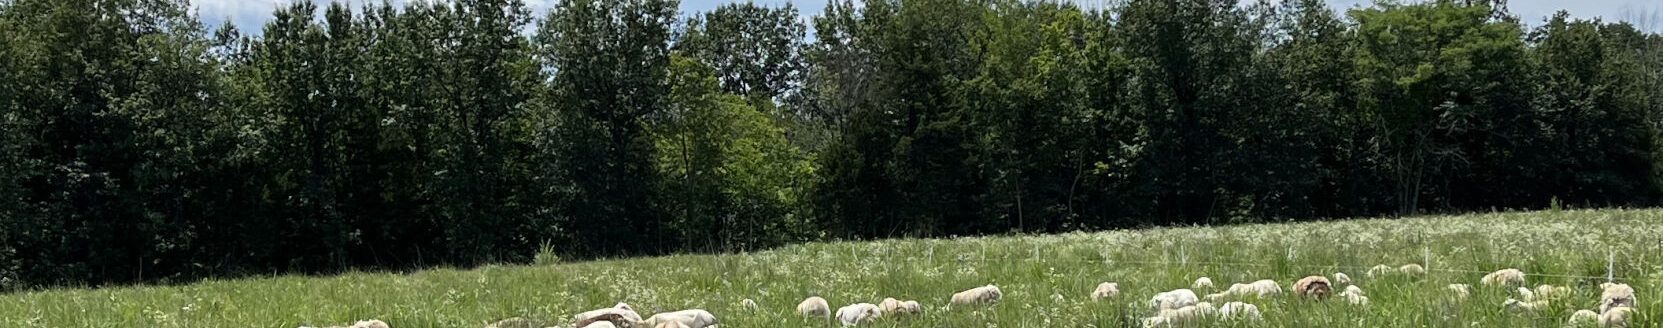 Katahdin sheep grazing Indiangrass, big bluestem, little bluestem mix during D3 drought in Truxton, Missouri. (Photo by Rusty Lee.)